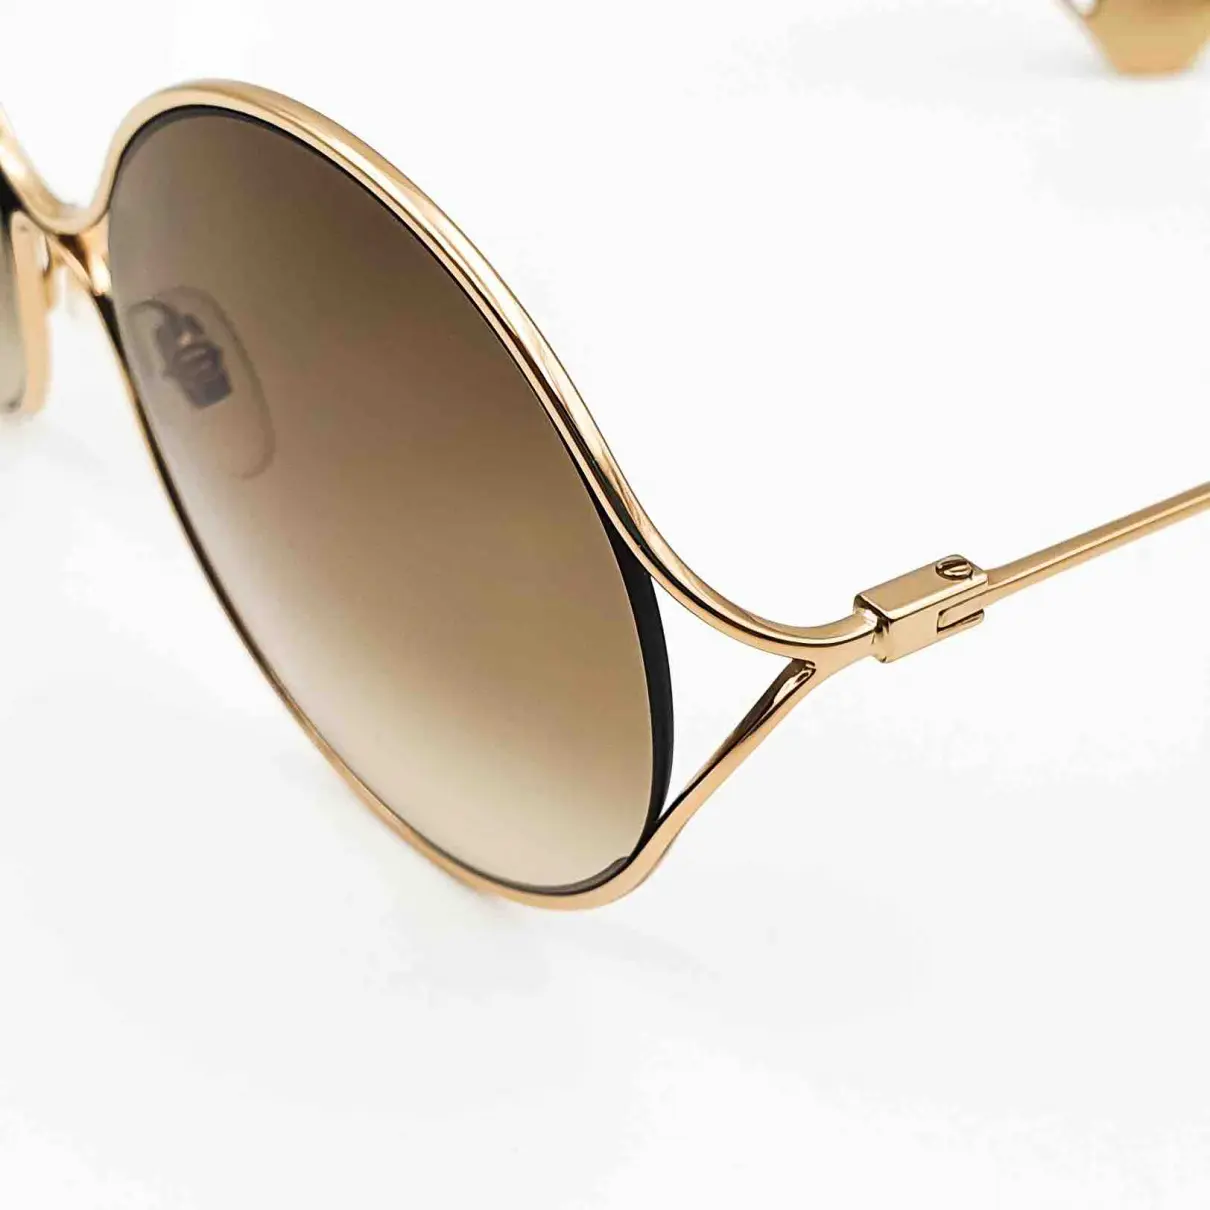 Luxury Gucci Sunglasses Women